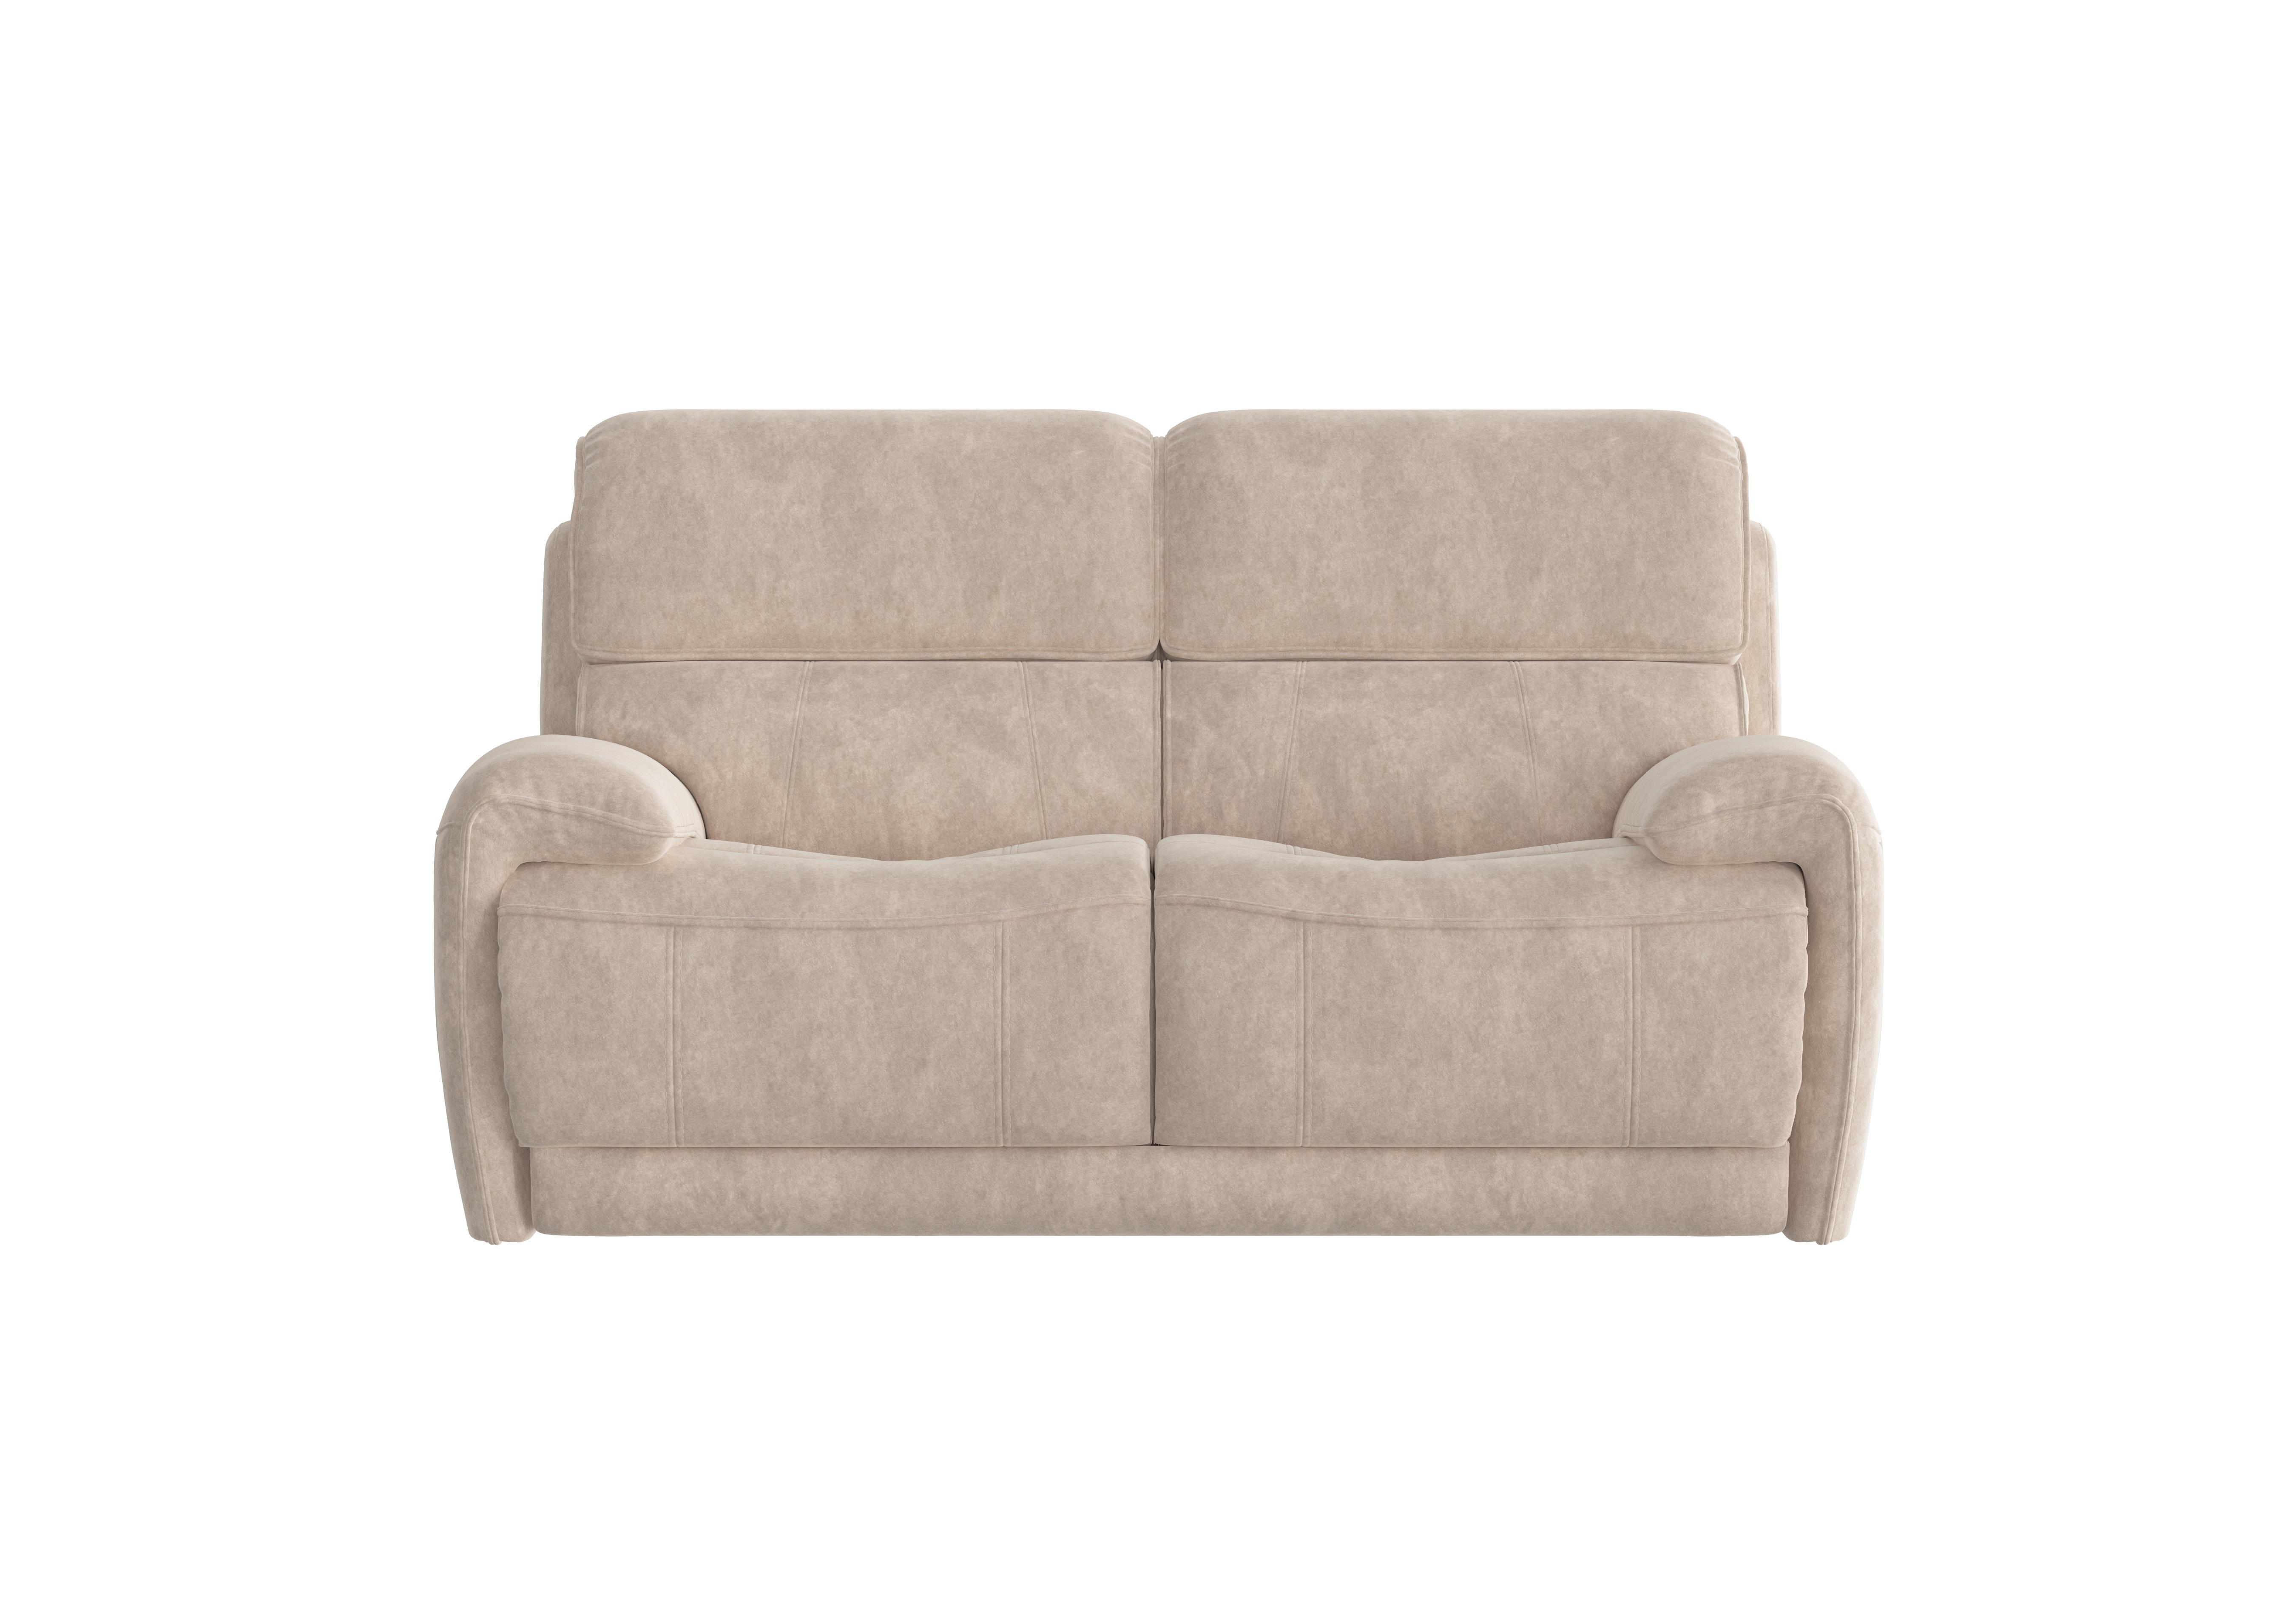 Link 2 Seater Fabric Sofa in Bfa-Bnn-R26 Fv2 Cream on Furniture Village